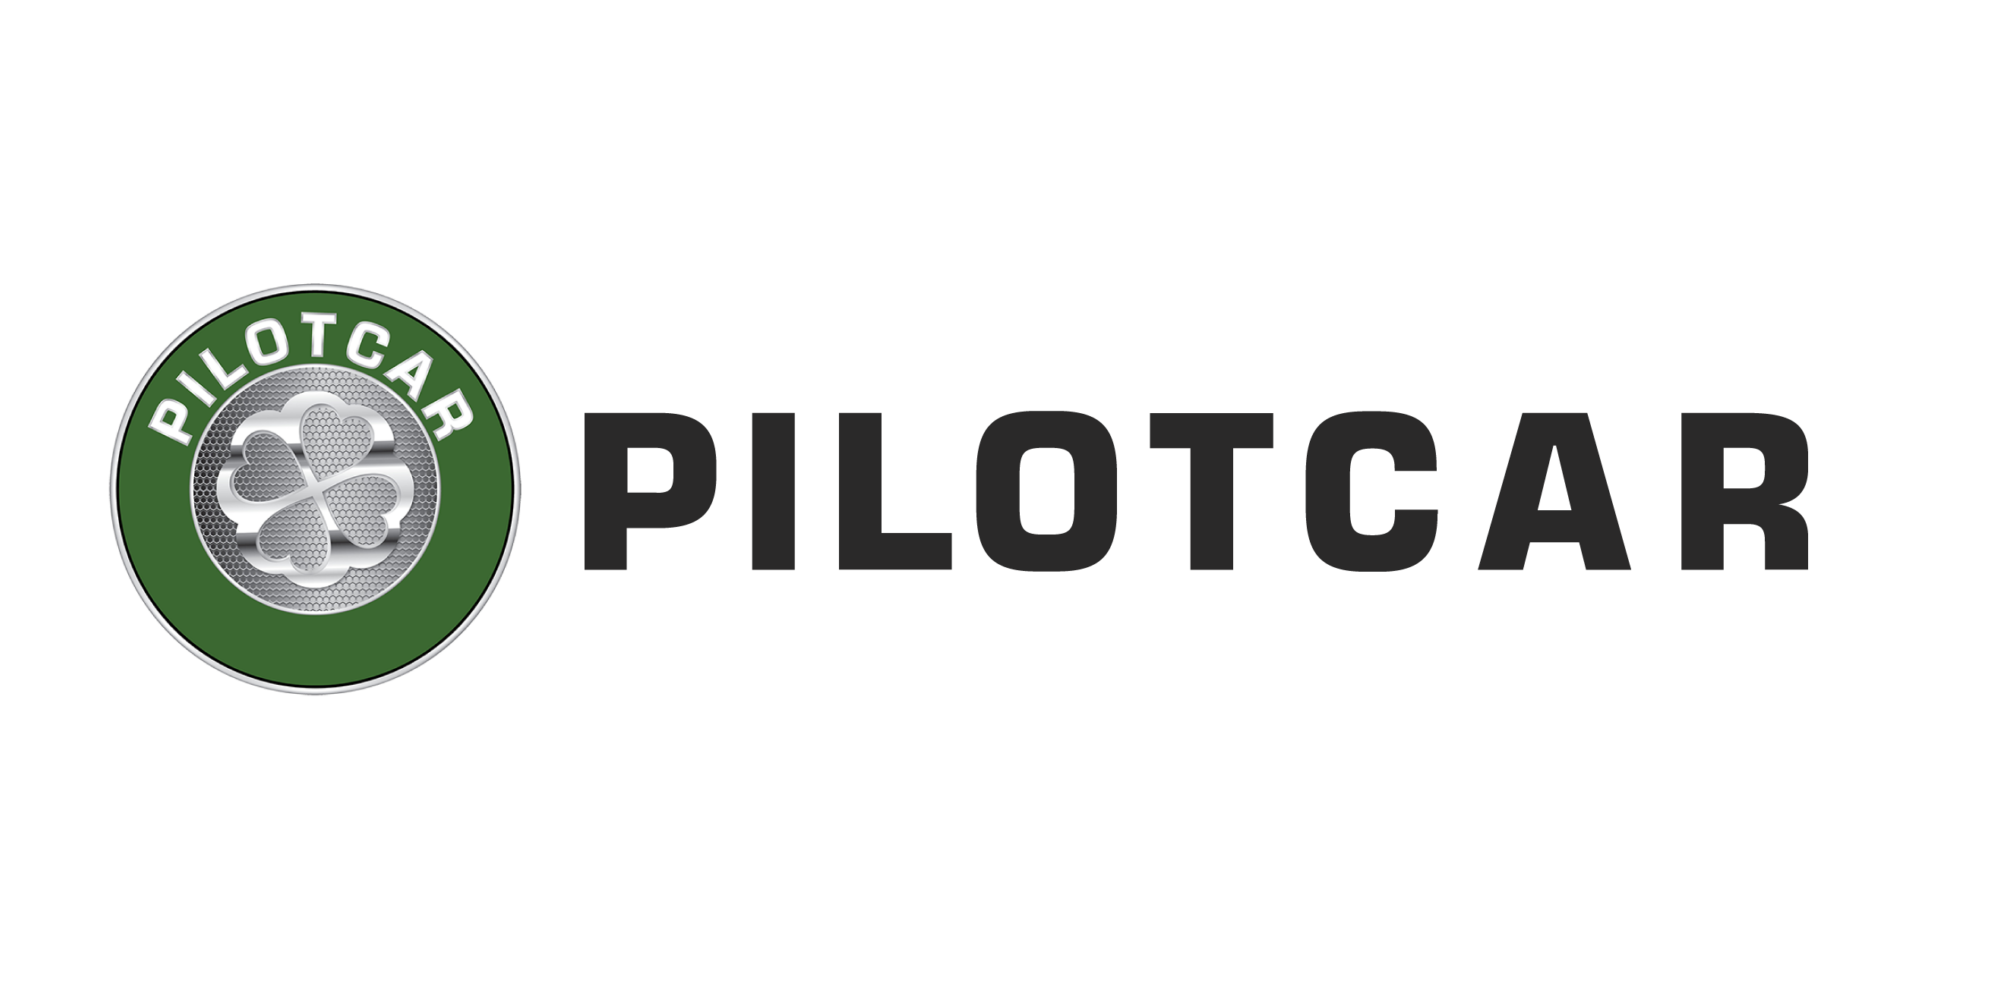 Pilotcar